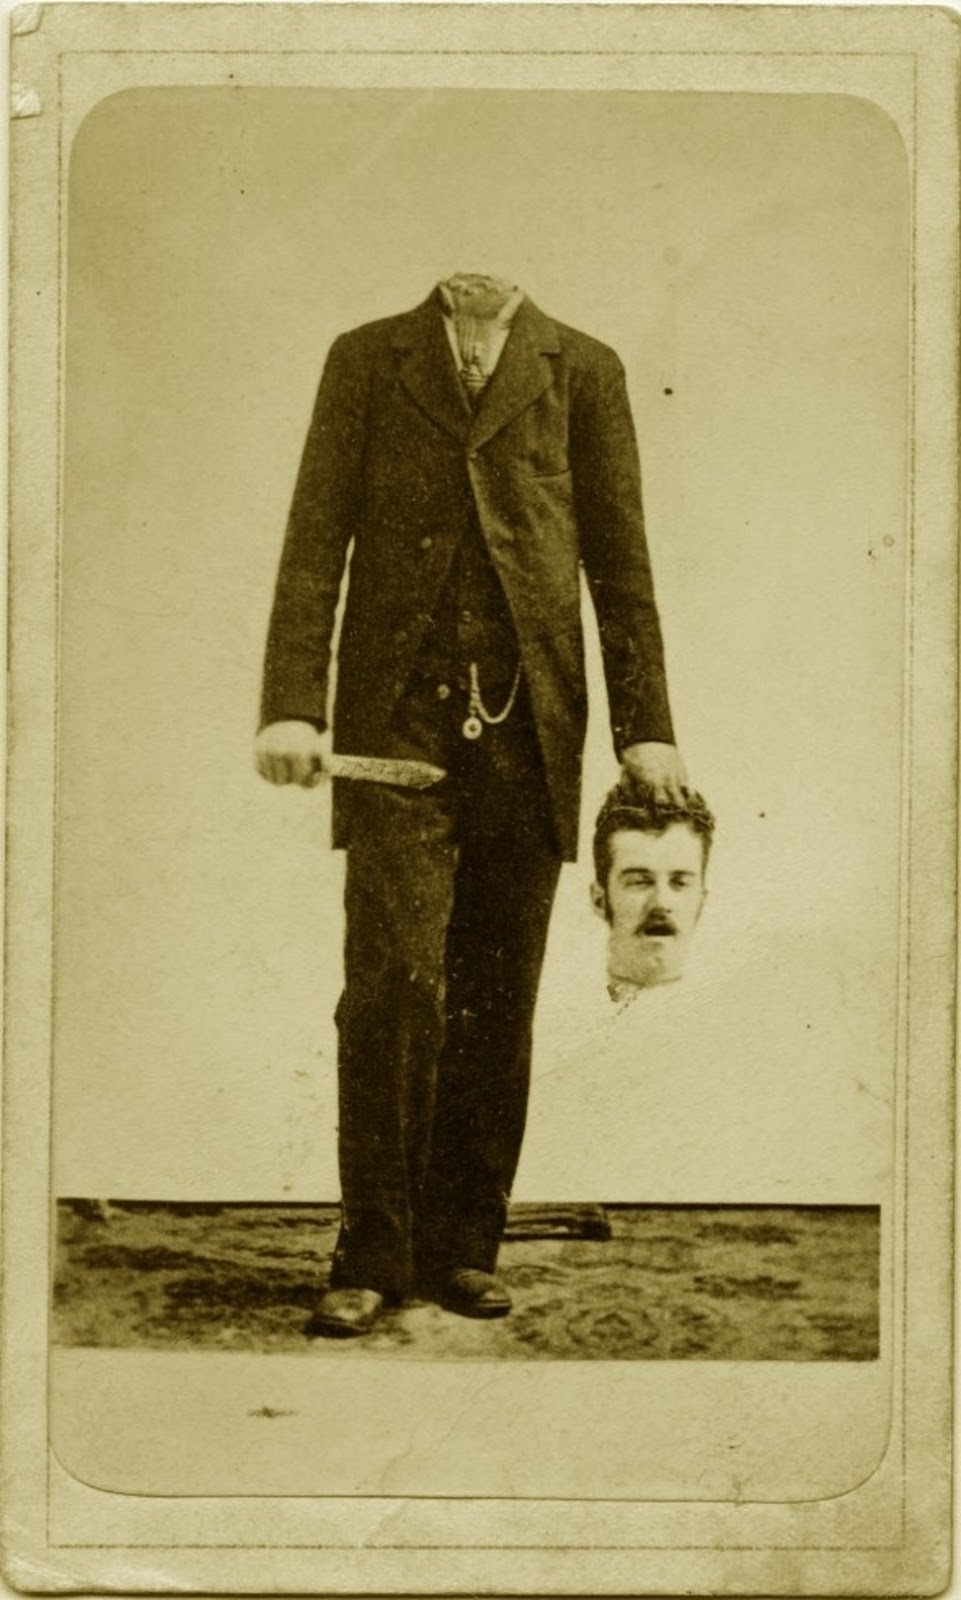 Lefejezett portrék – a viktoriánus kor morbid humora